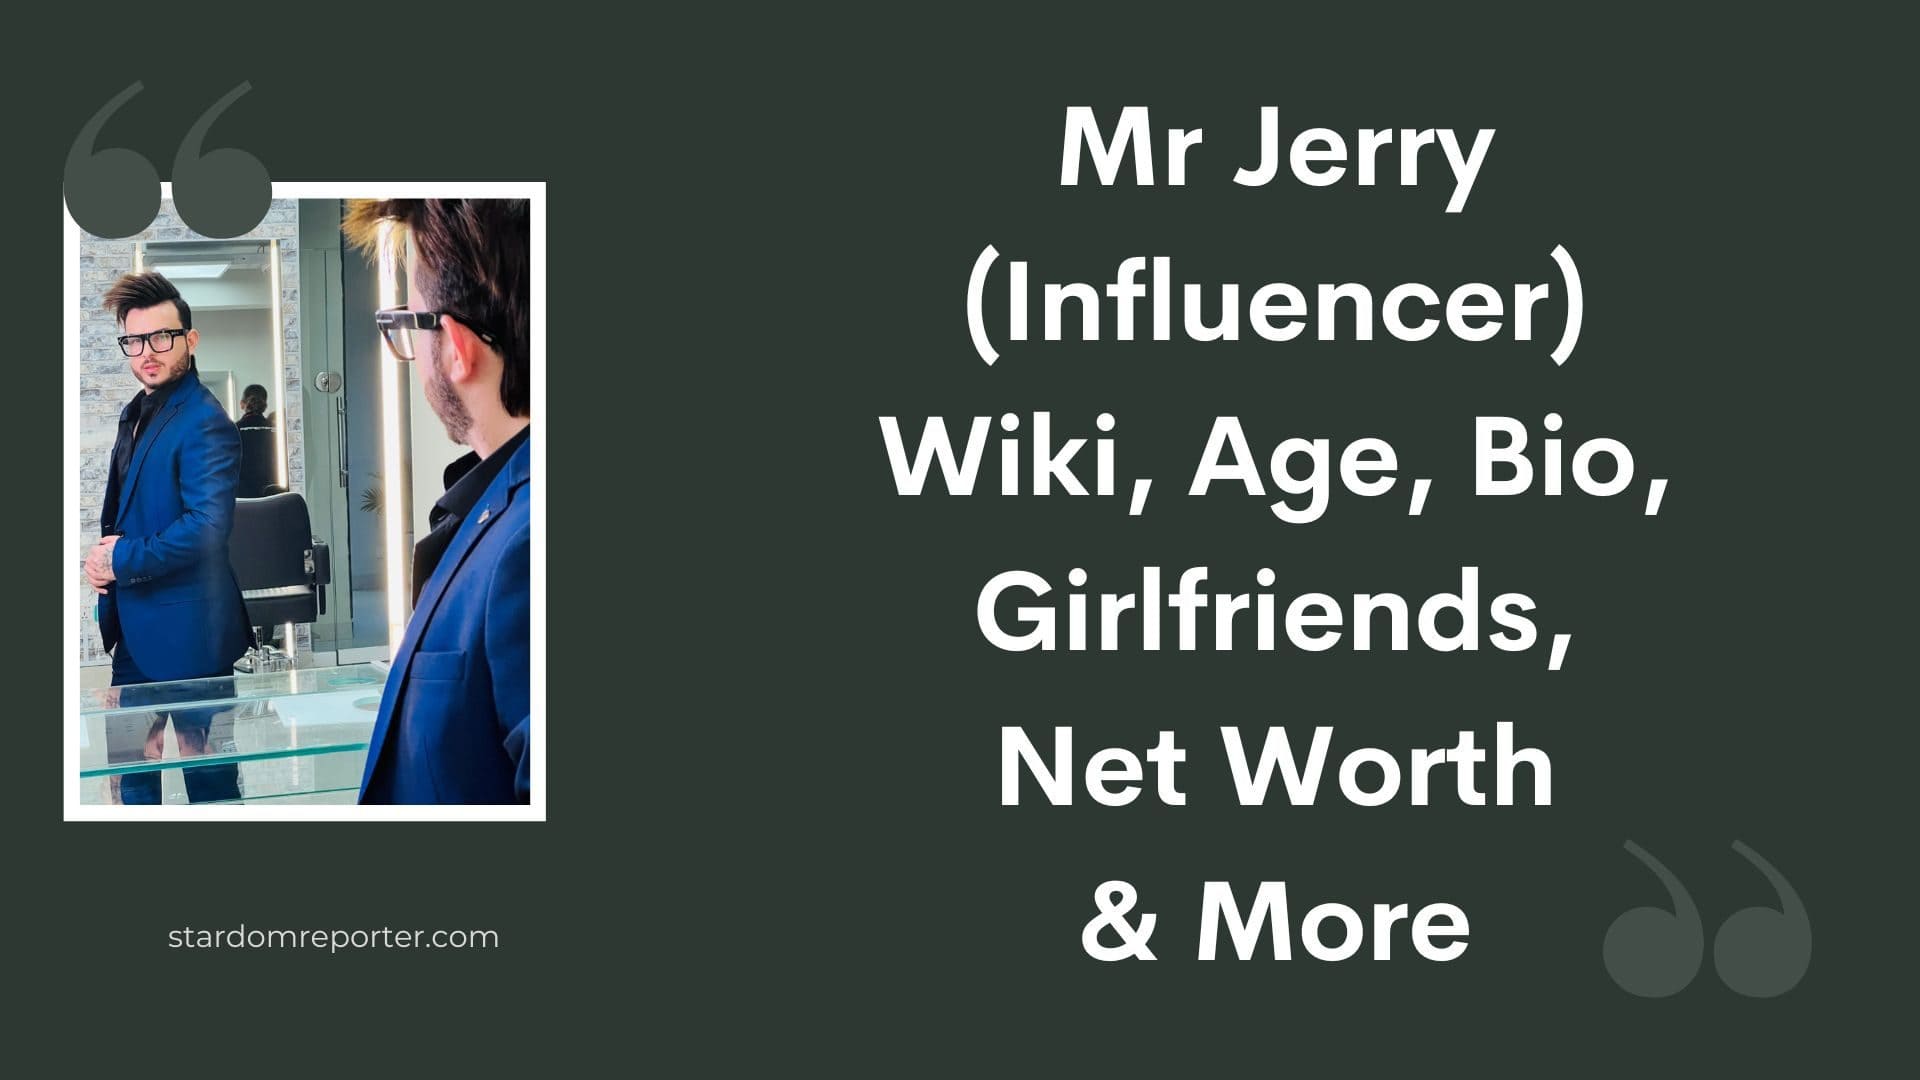 Mr Jerry (Influencer) Wiki, Age, Bio, Girlfriends, Net Worth & More - 35